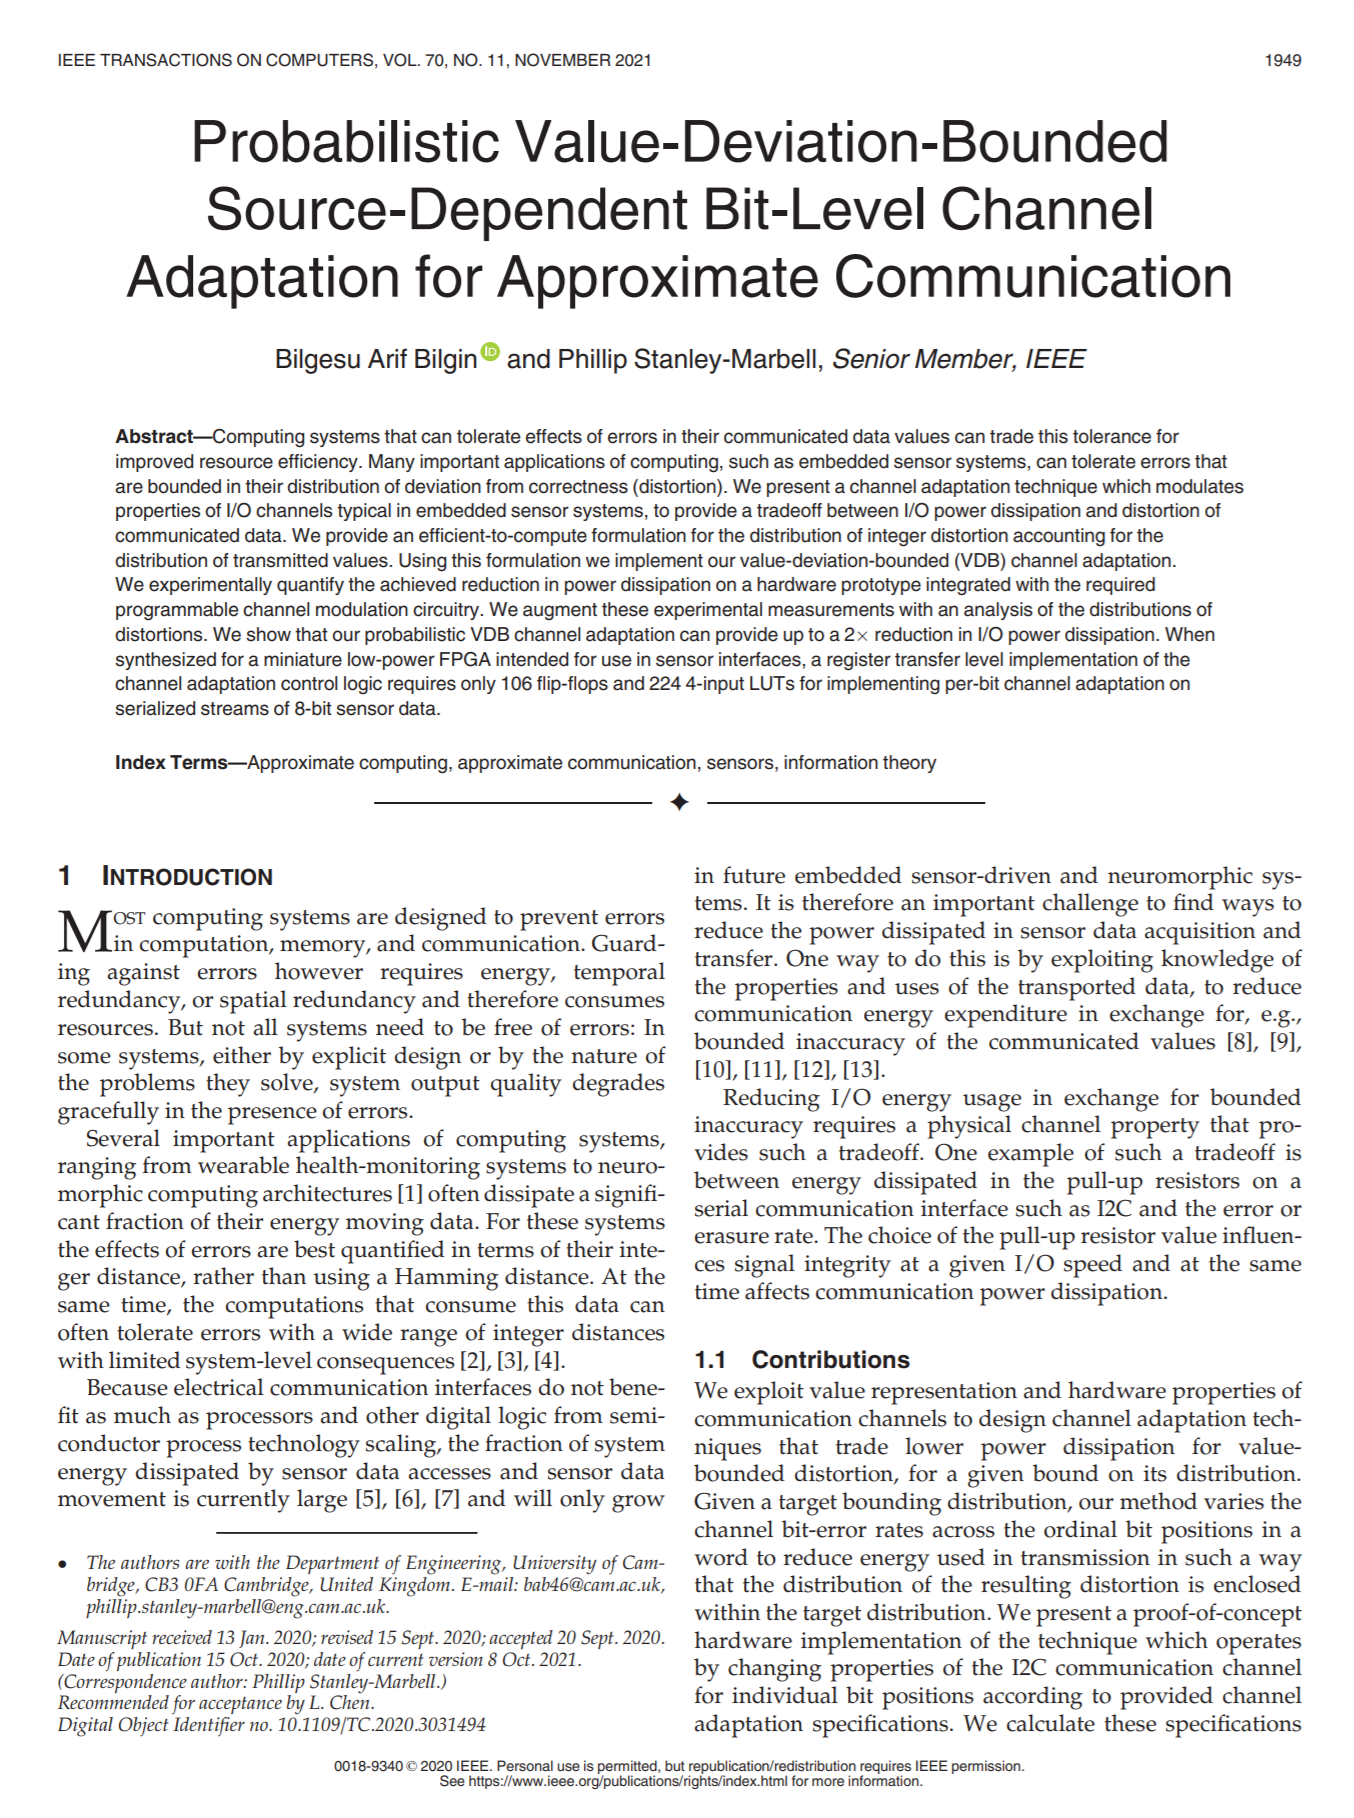 Probabilistic Value-Deviation-Bounded Source-Dependent Bit-Level Channel Adaptation for Approximate Communication